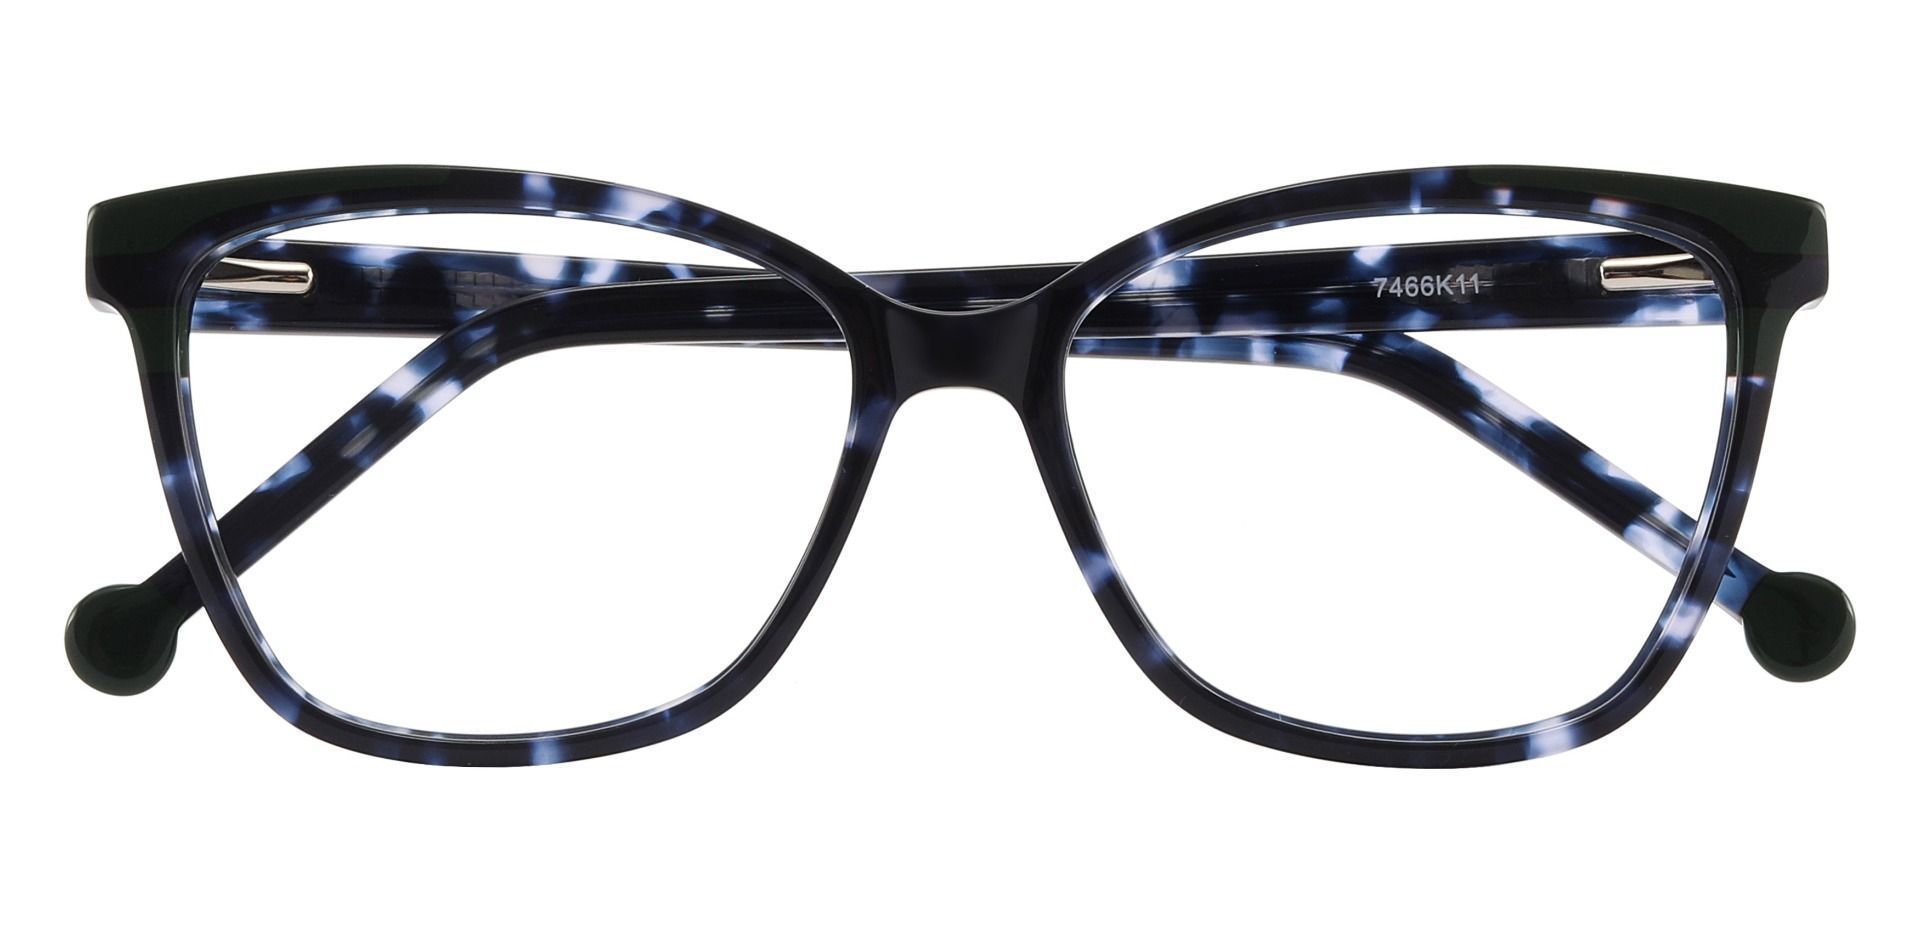 Shania Cat Eye Prescription Glasses - Multi Color